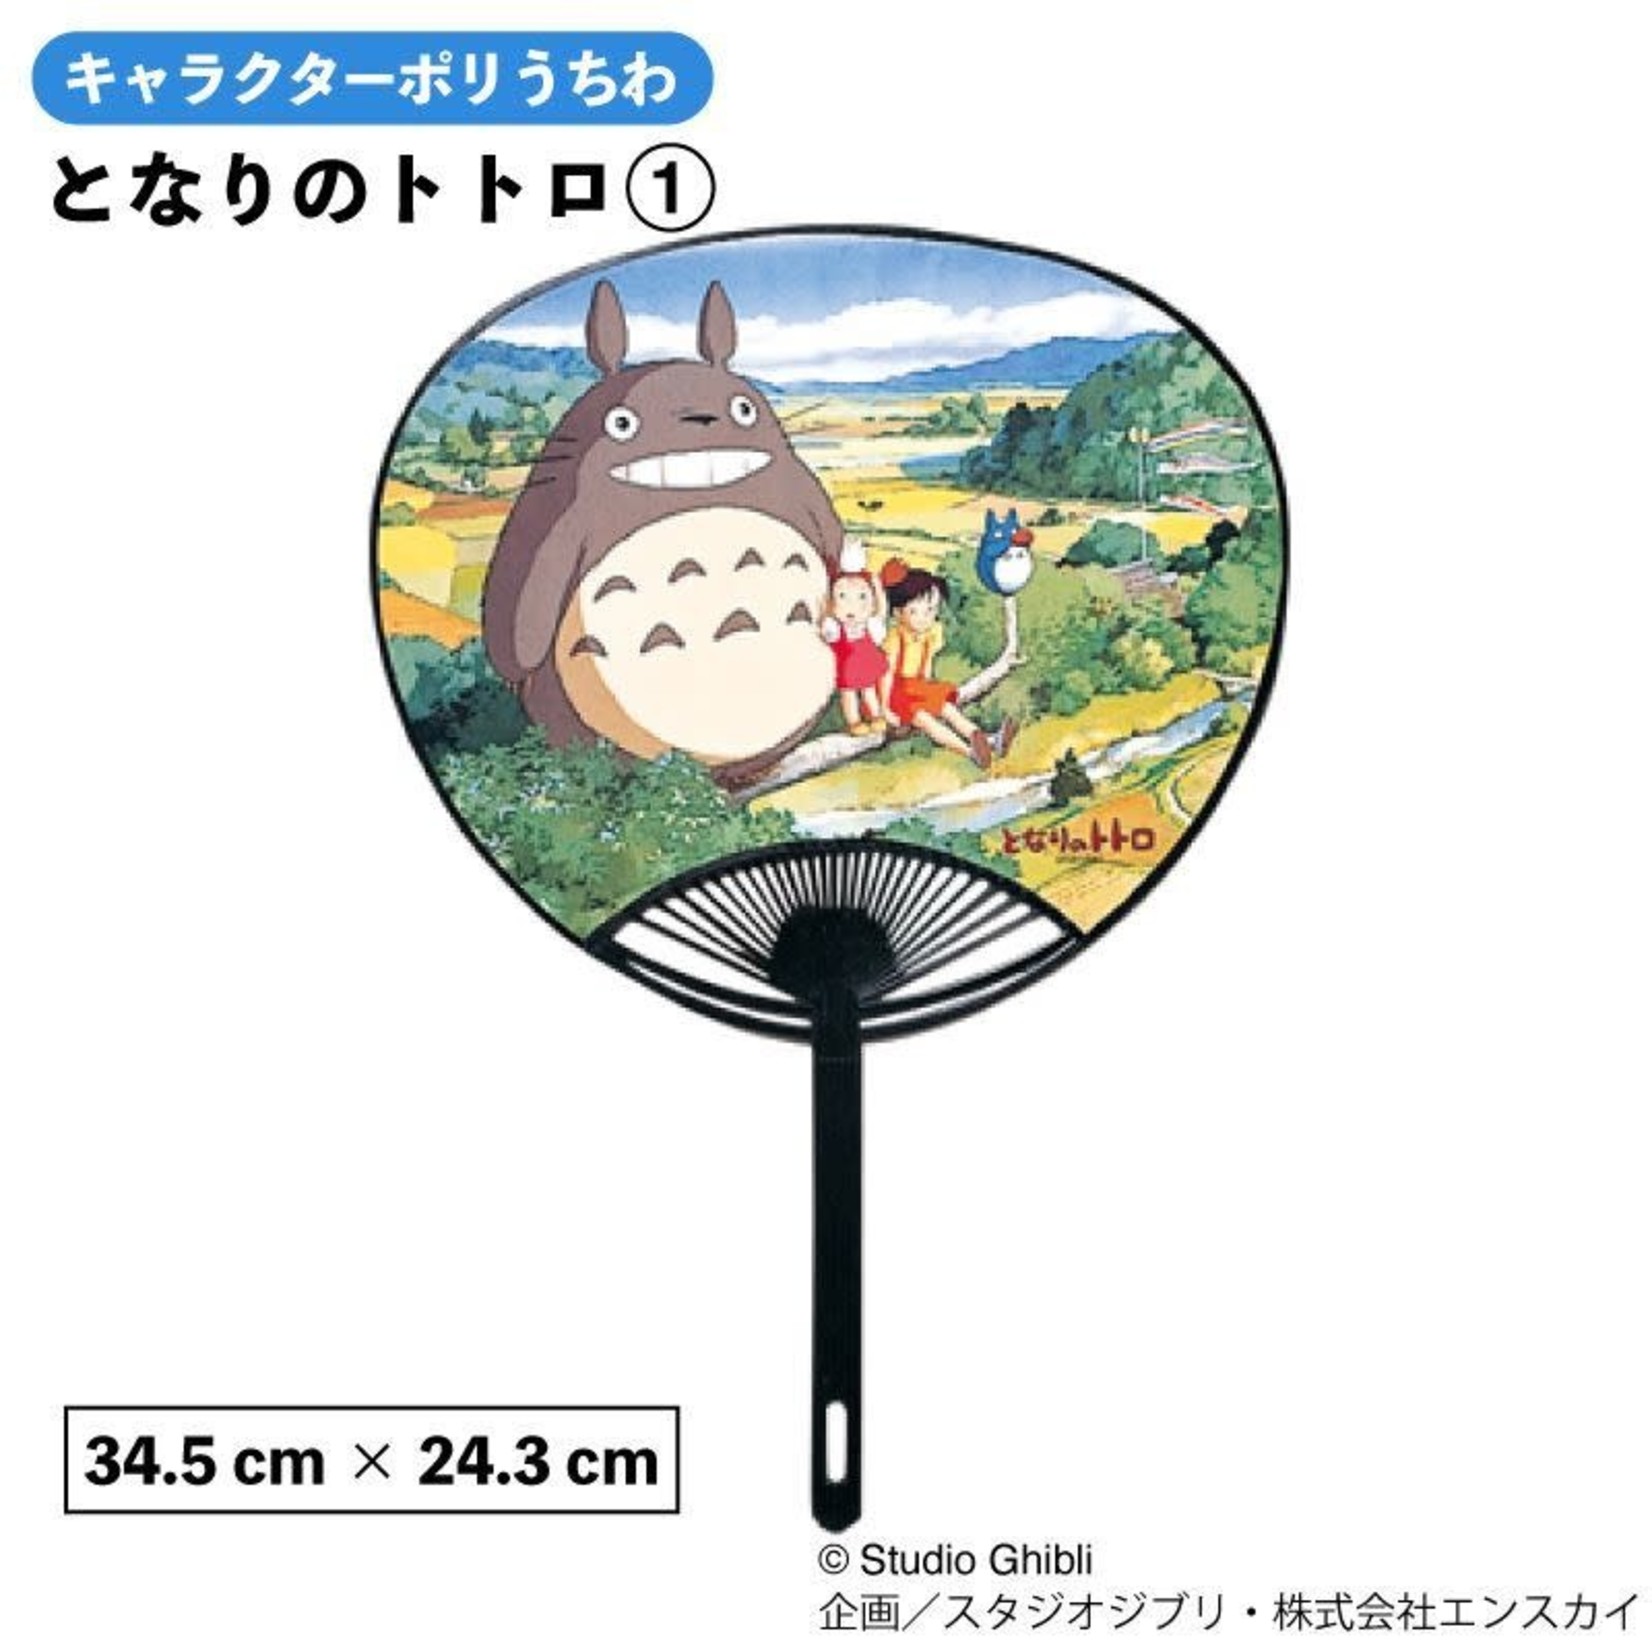 Studio Ghibli FAN - Uchiwa - Totoro Official 4001